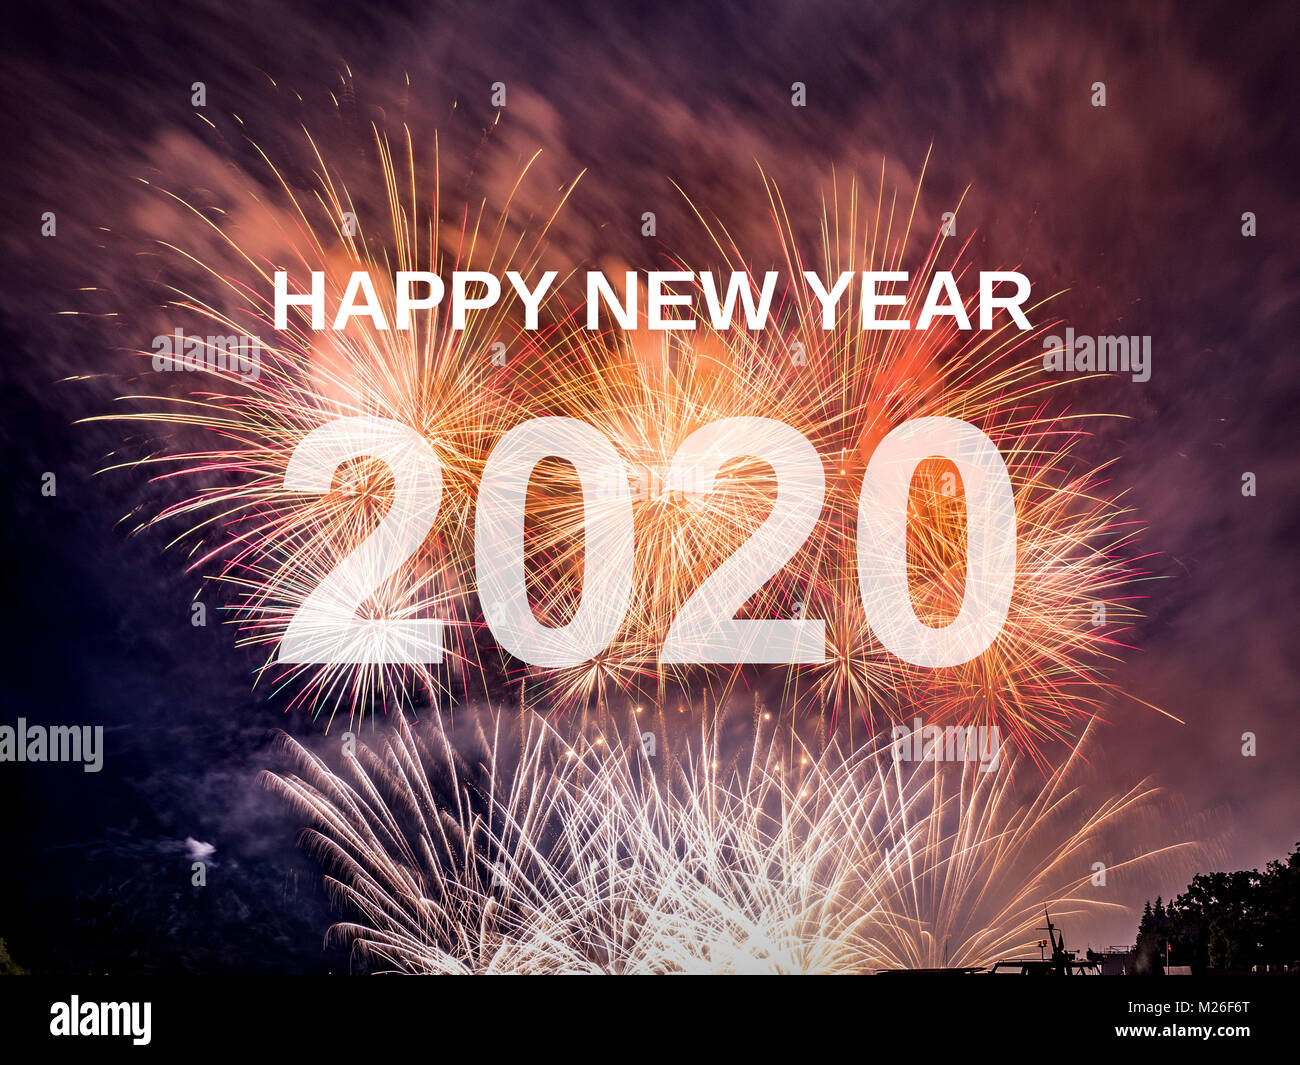 Happy new year 2020 with fireworks background. Celebration New Year 2020 Stock Photo